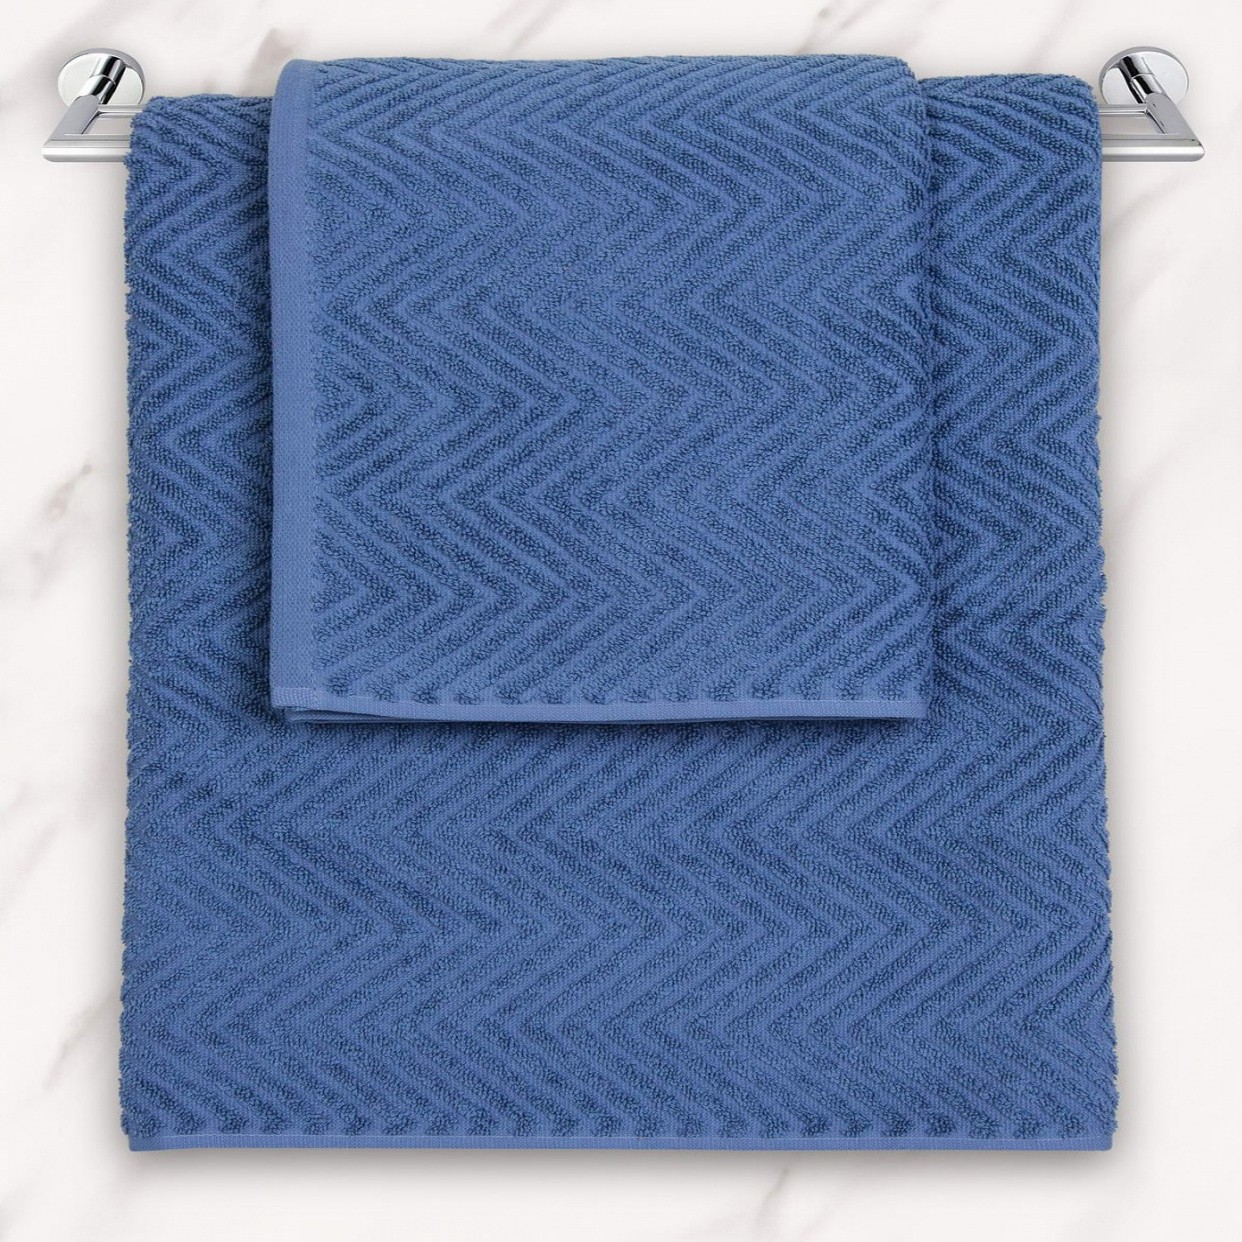 Полотенце Victoria цвет: голубой (50х70 см), размер 50х70 см sofi753854 Полотенце Victoria цвет: голубой (50х70 см) - фото 1